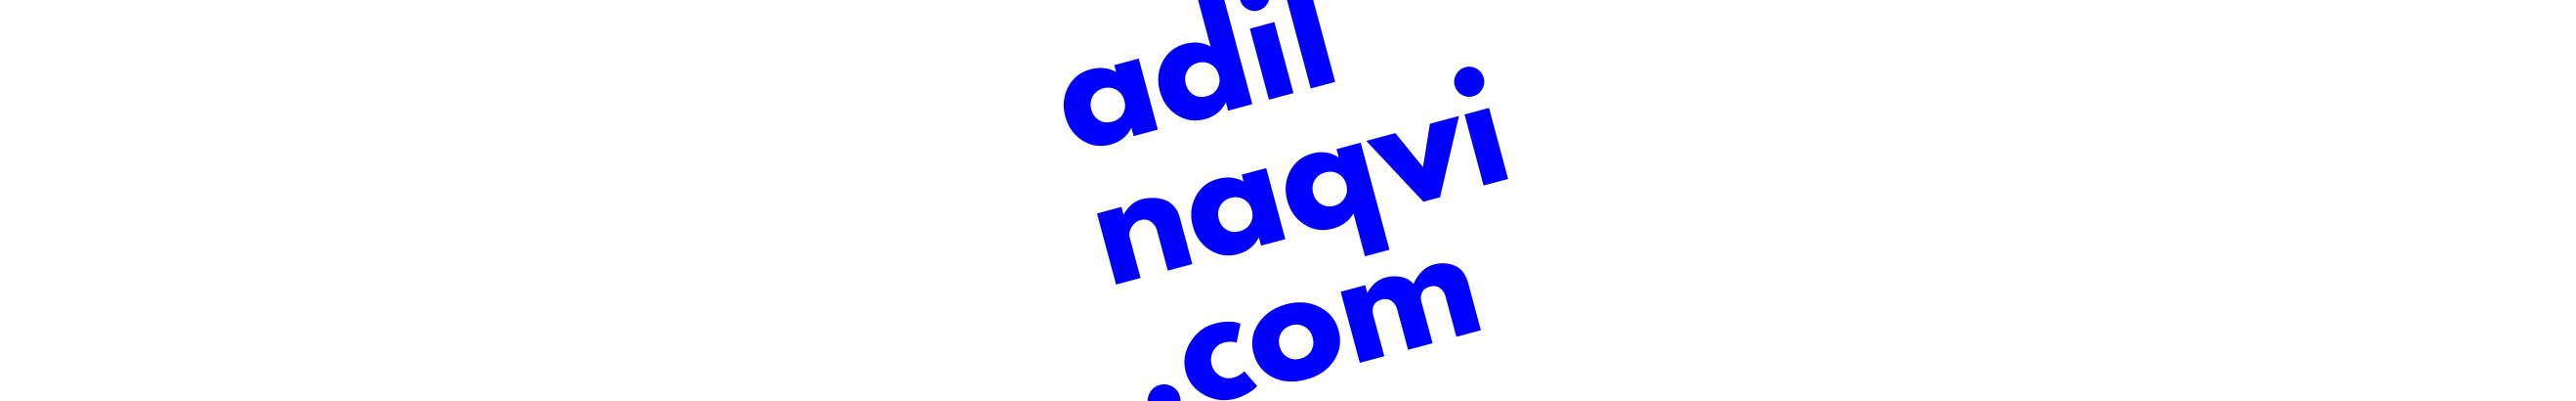 Adil Naqvis profilbanner